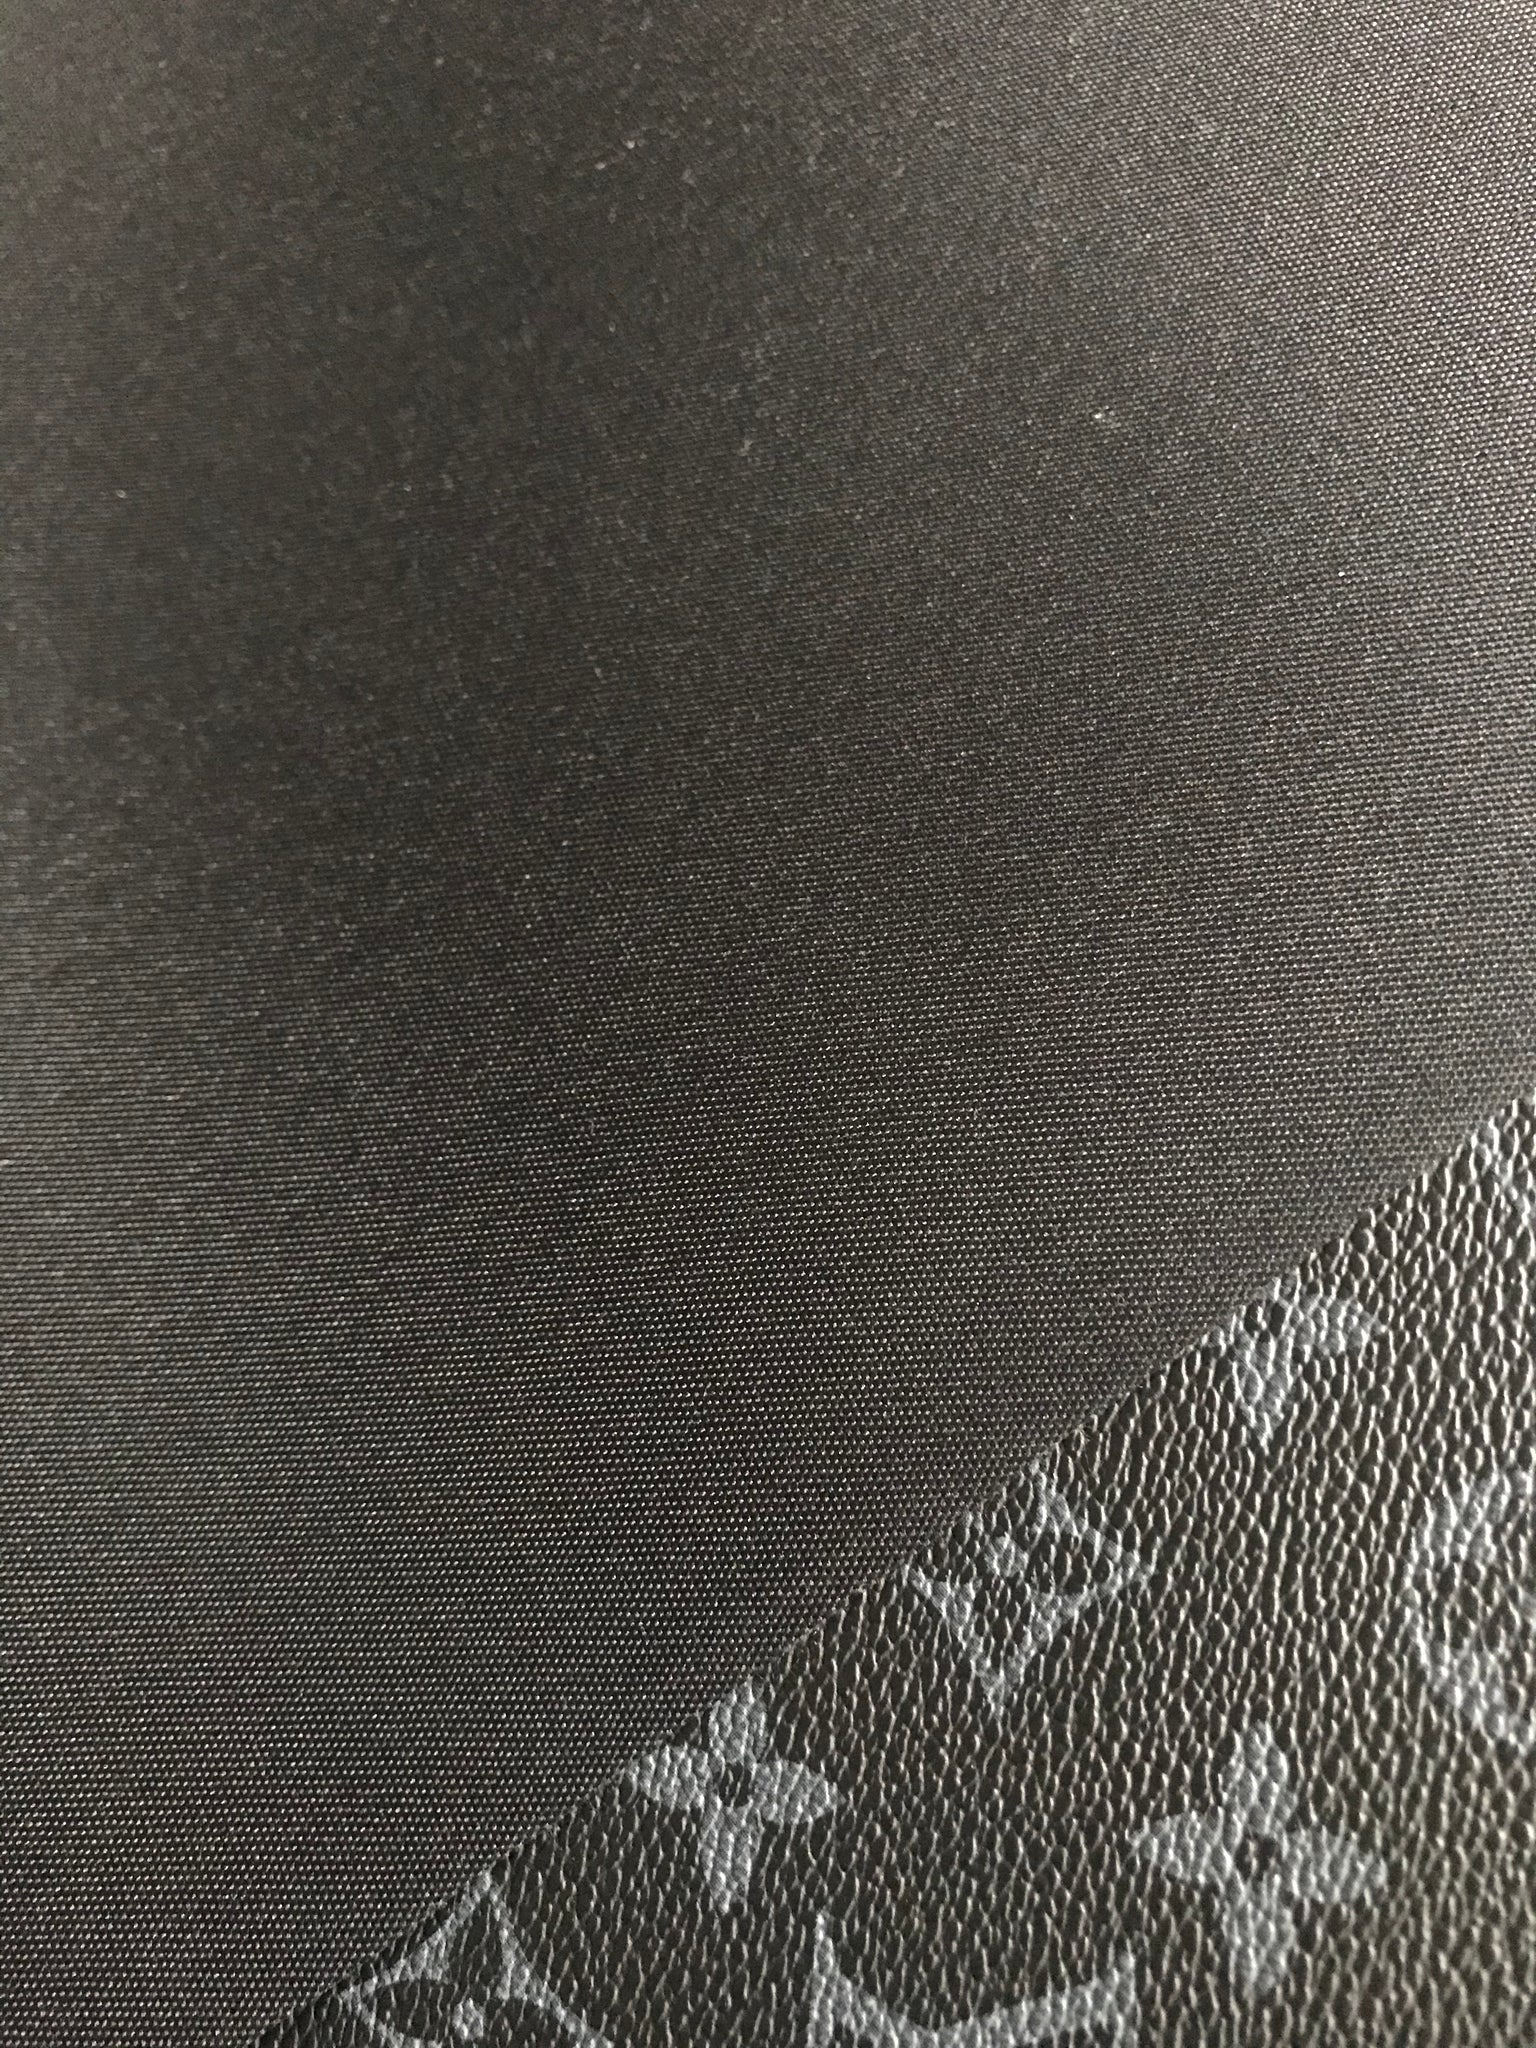 Classic Black Grey Lv Leather Fabric For Bags Handmade Custom